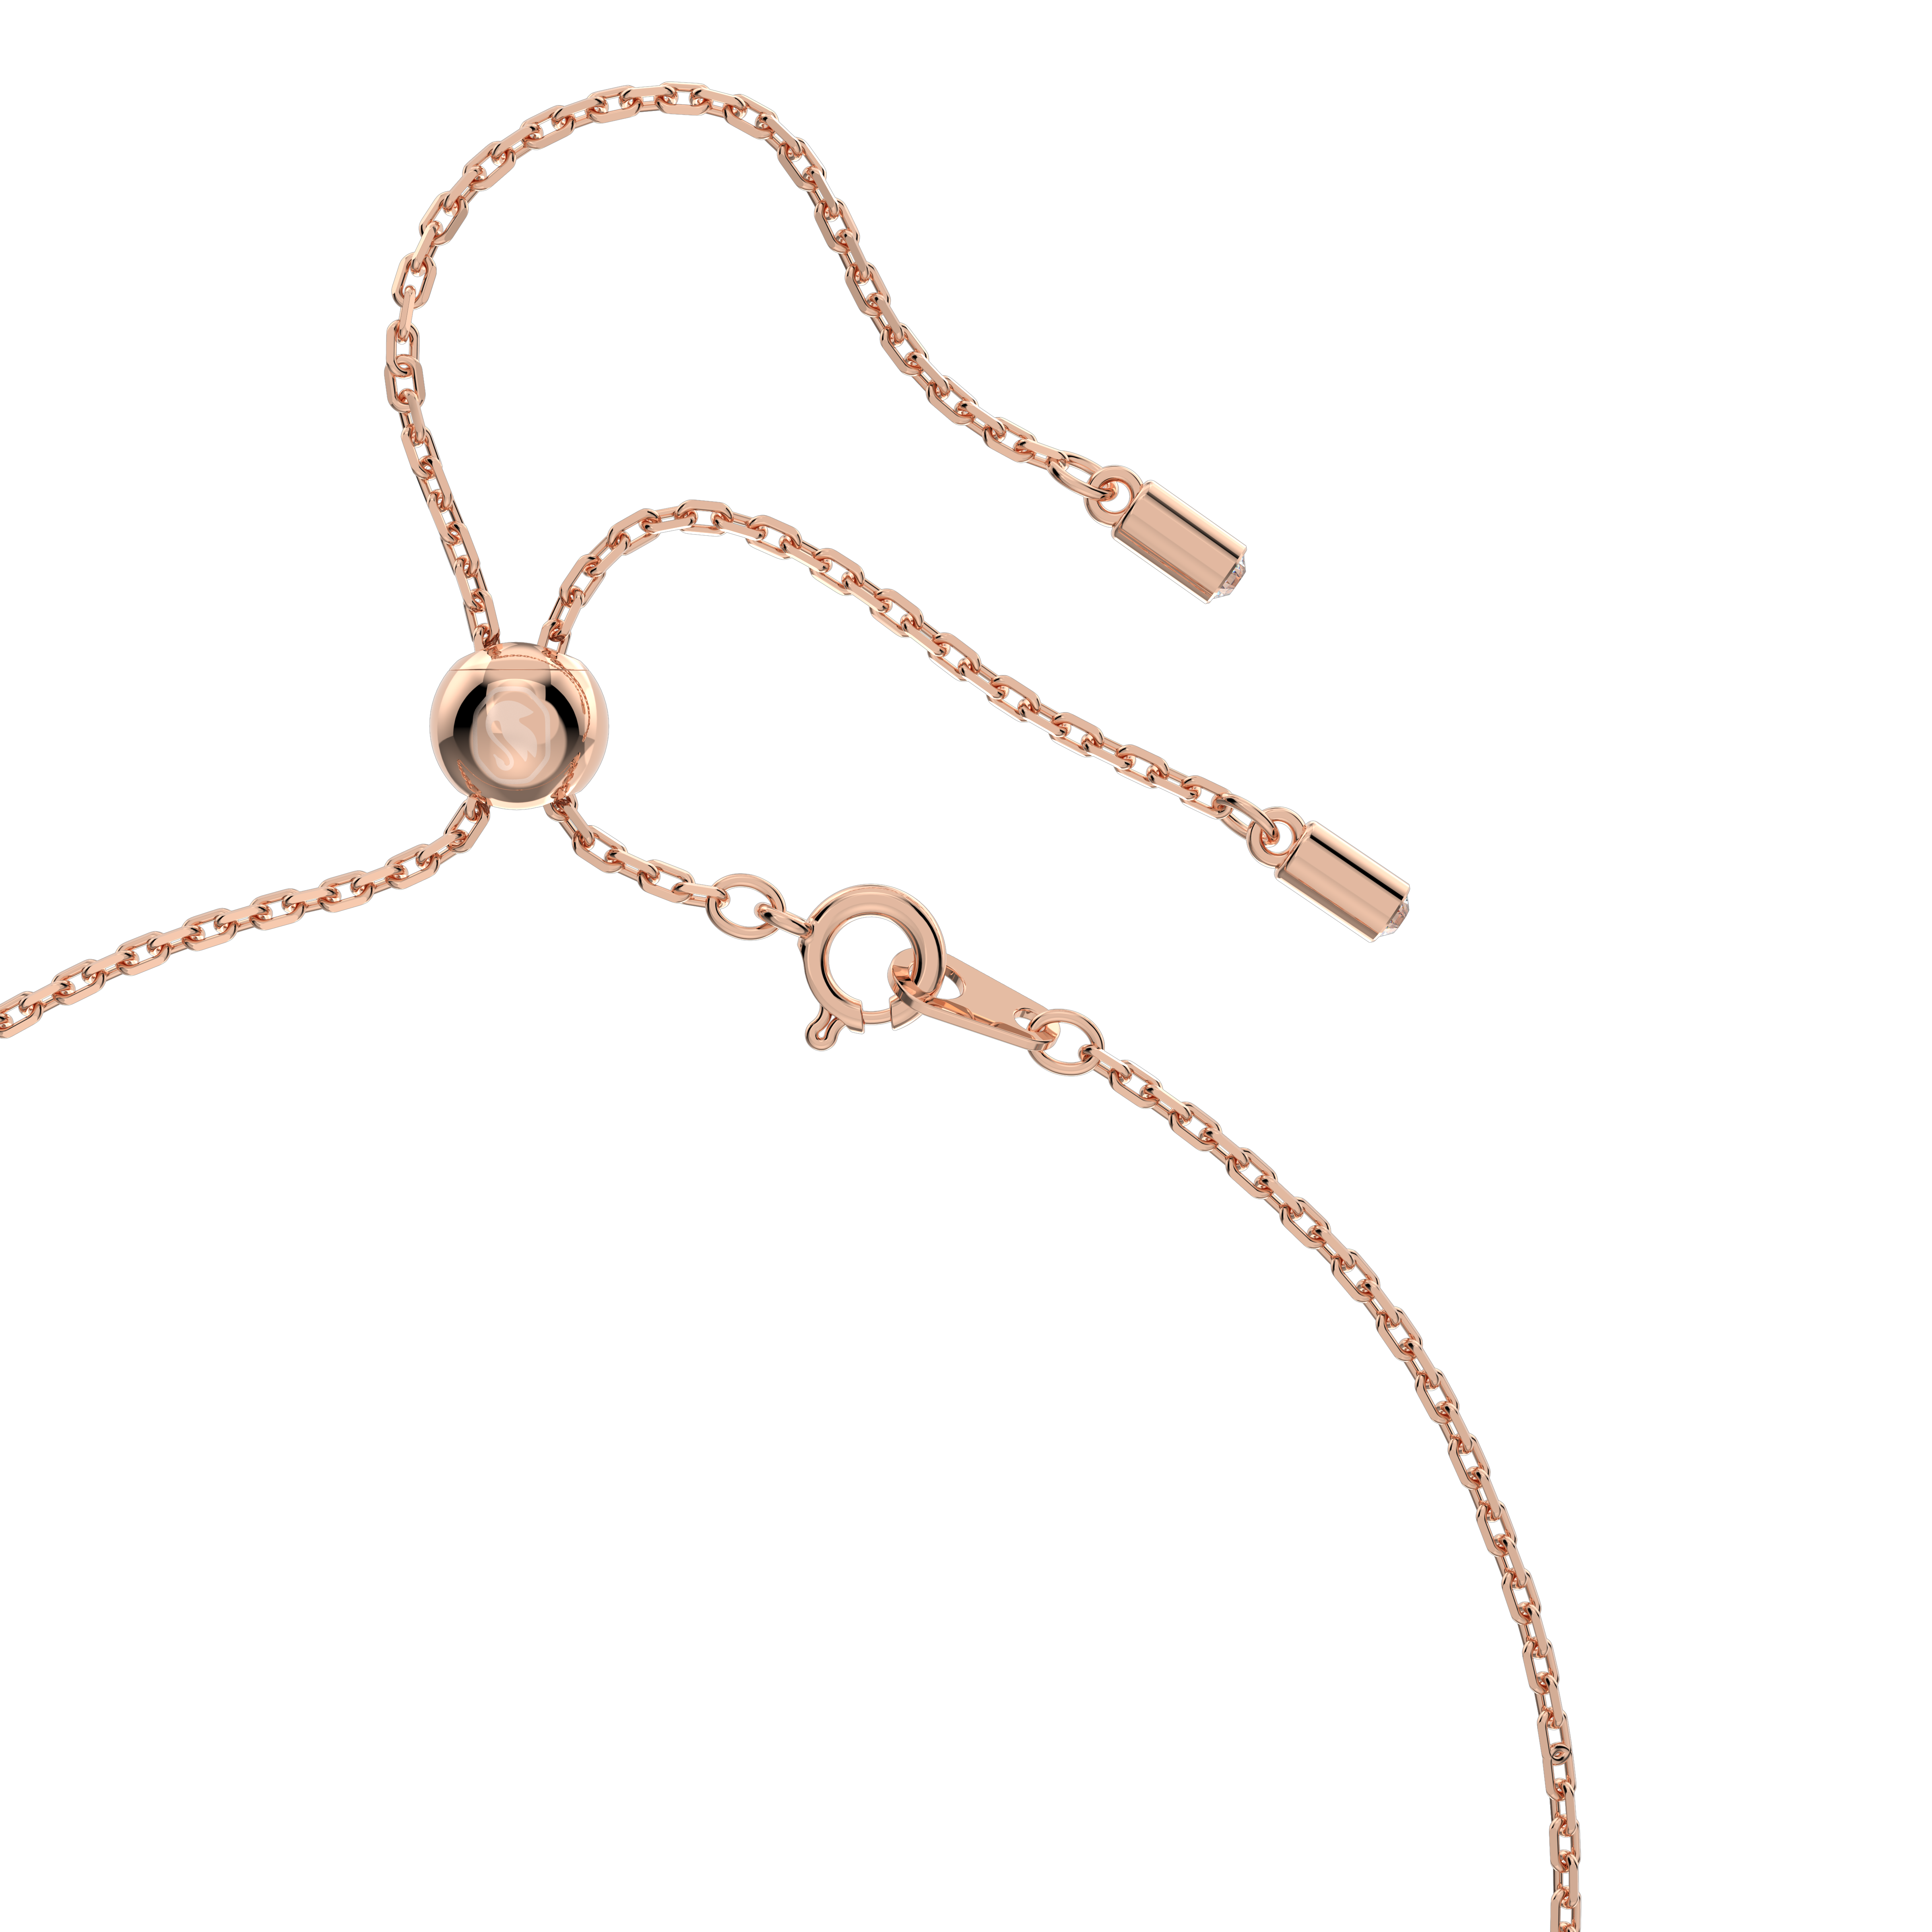 Stella Y necklace, Kite cut, Star, White, Rose gold-tone plated by SWAROVSKI